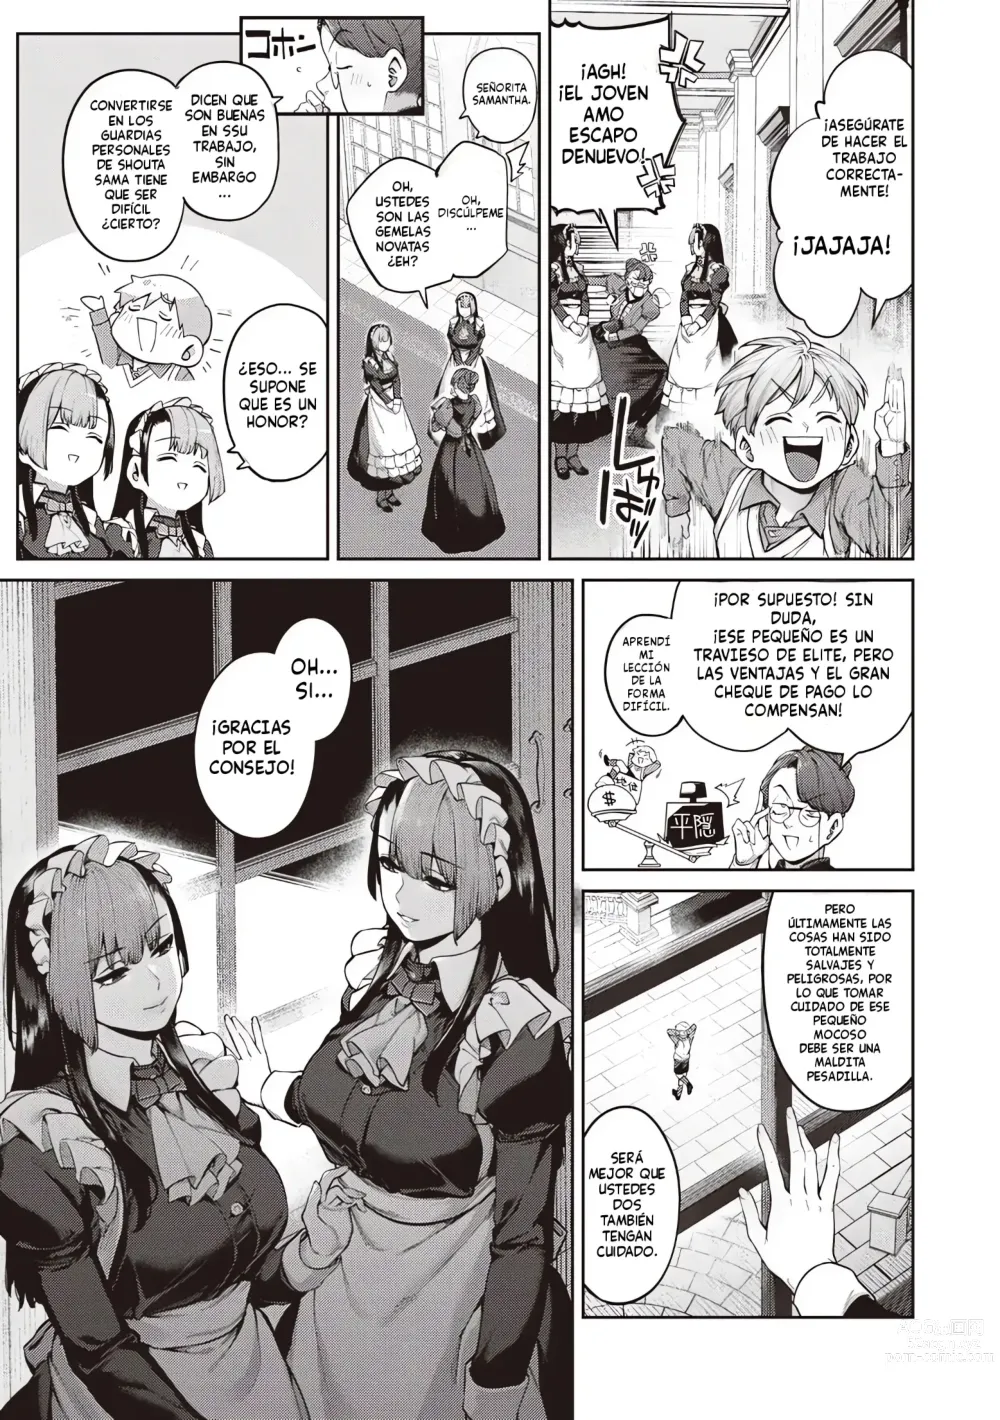 Page 3 of manga Order Maid!